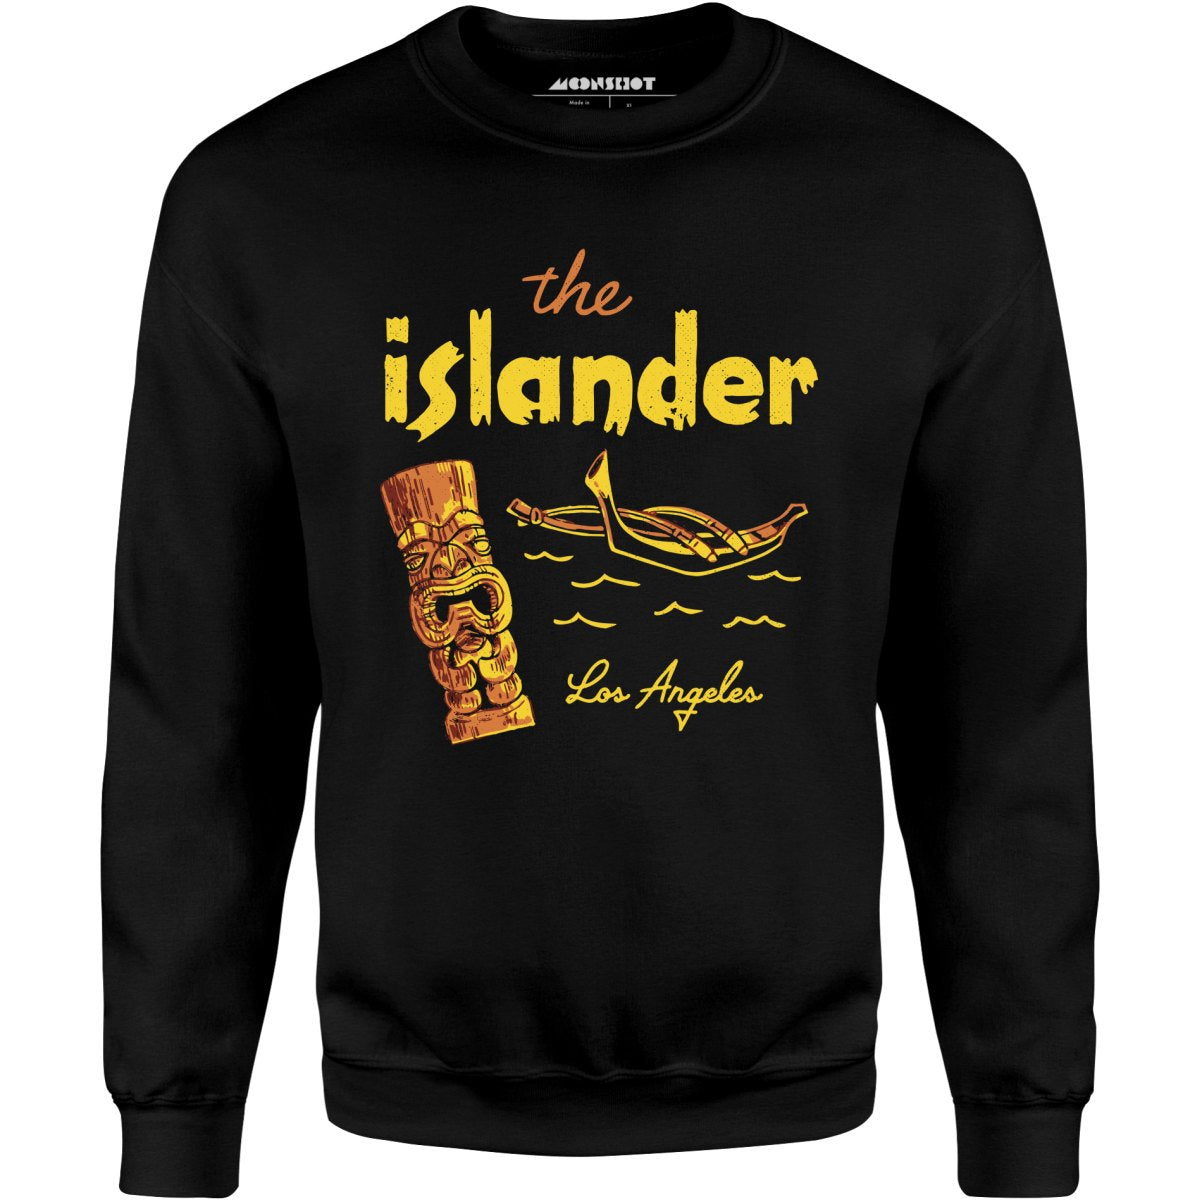 The Islander v2 - Los Angeles, CA - Vintage Tiki Bar - Unisex Sweatshirt